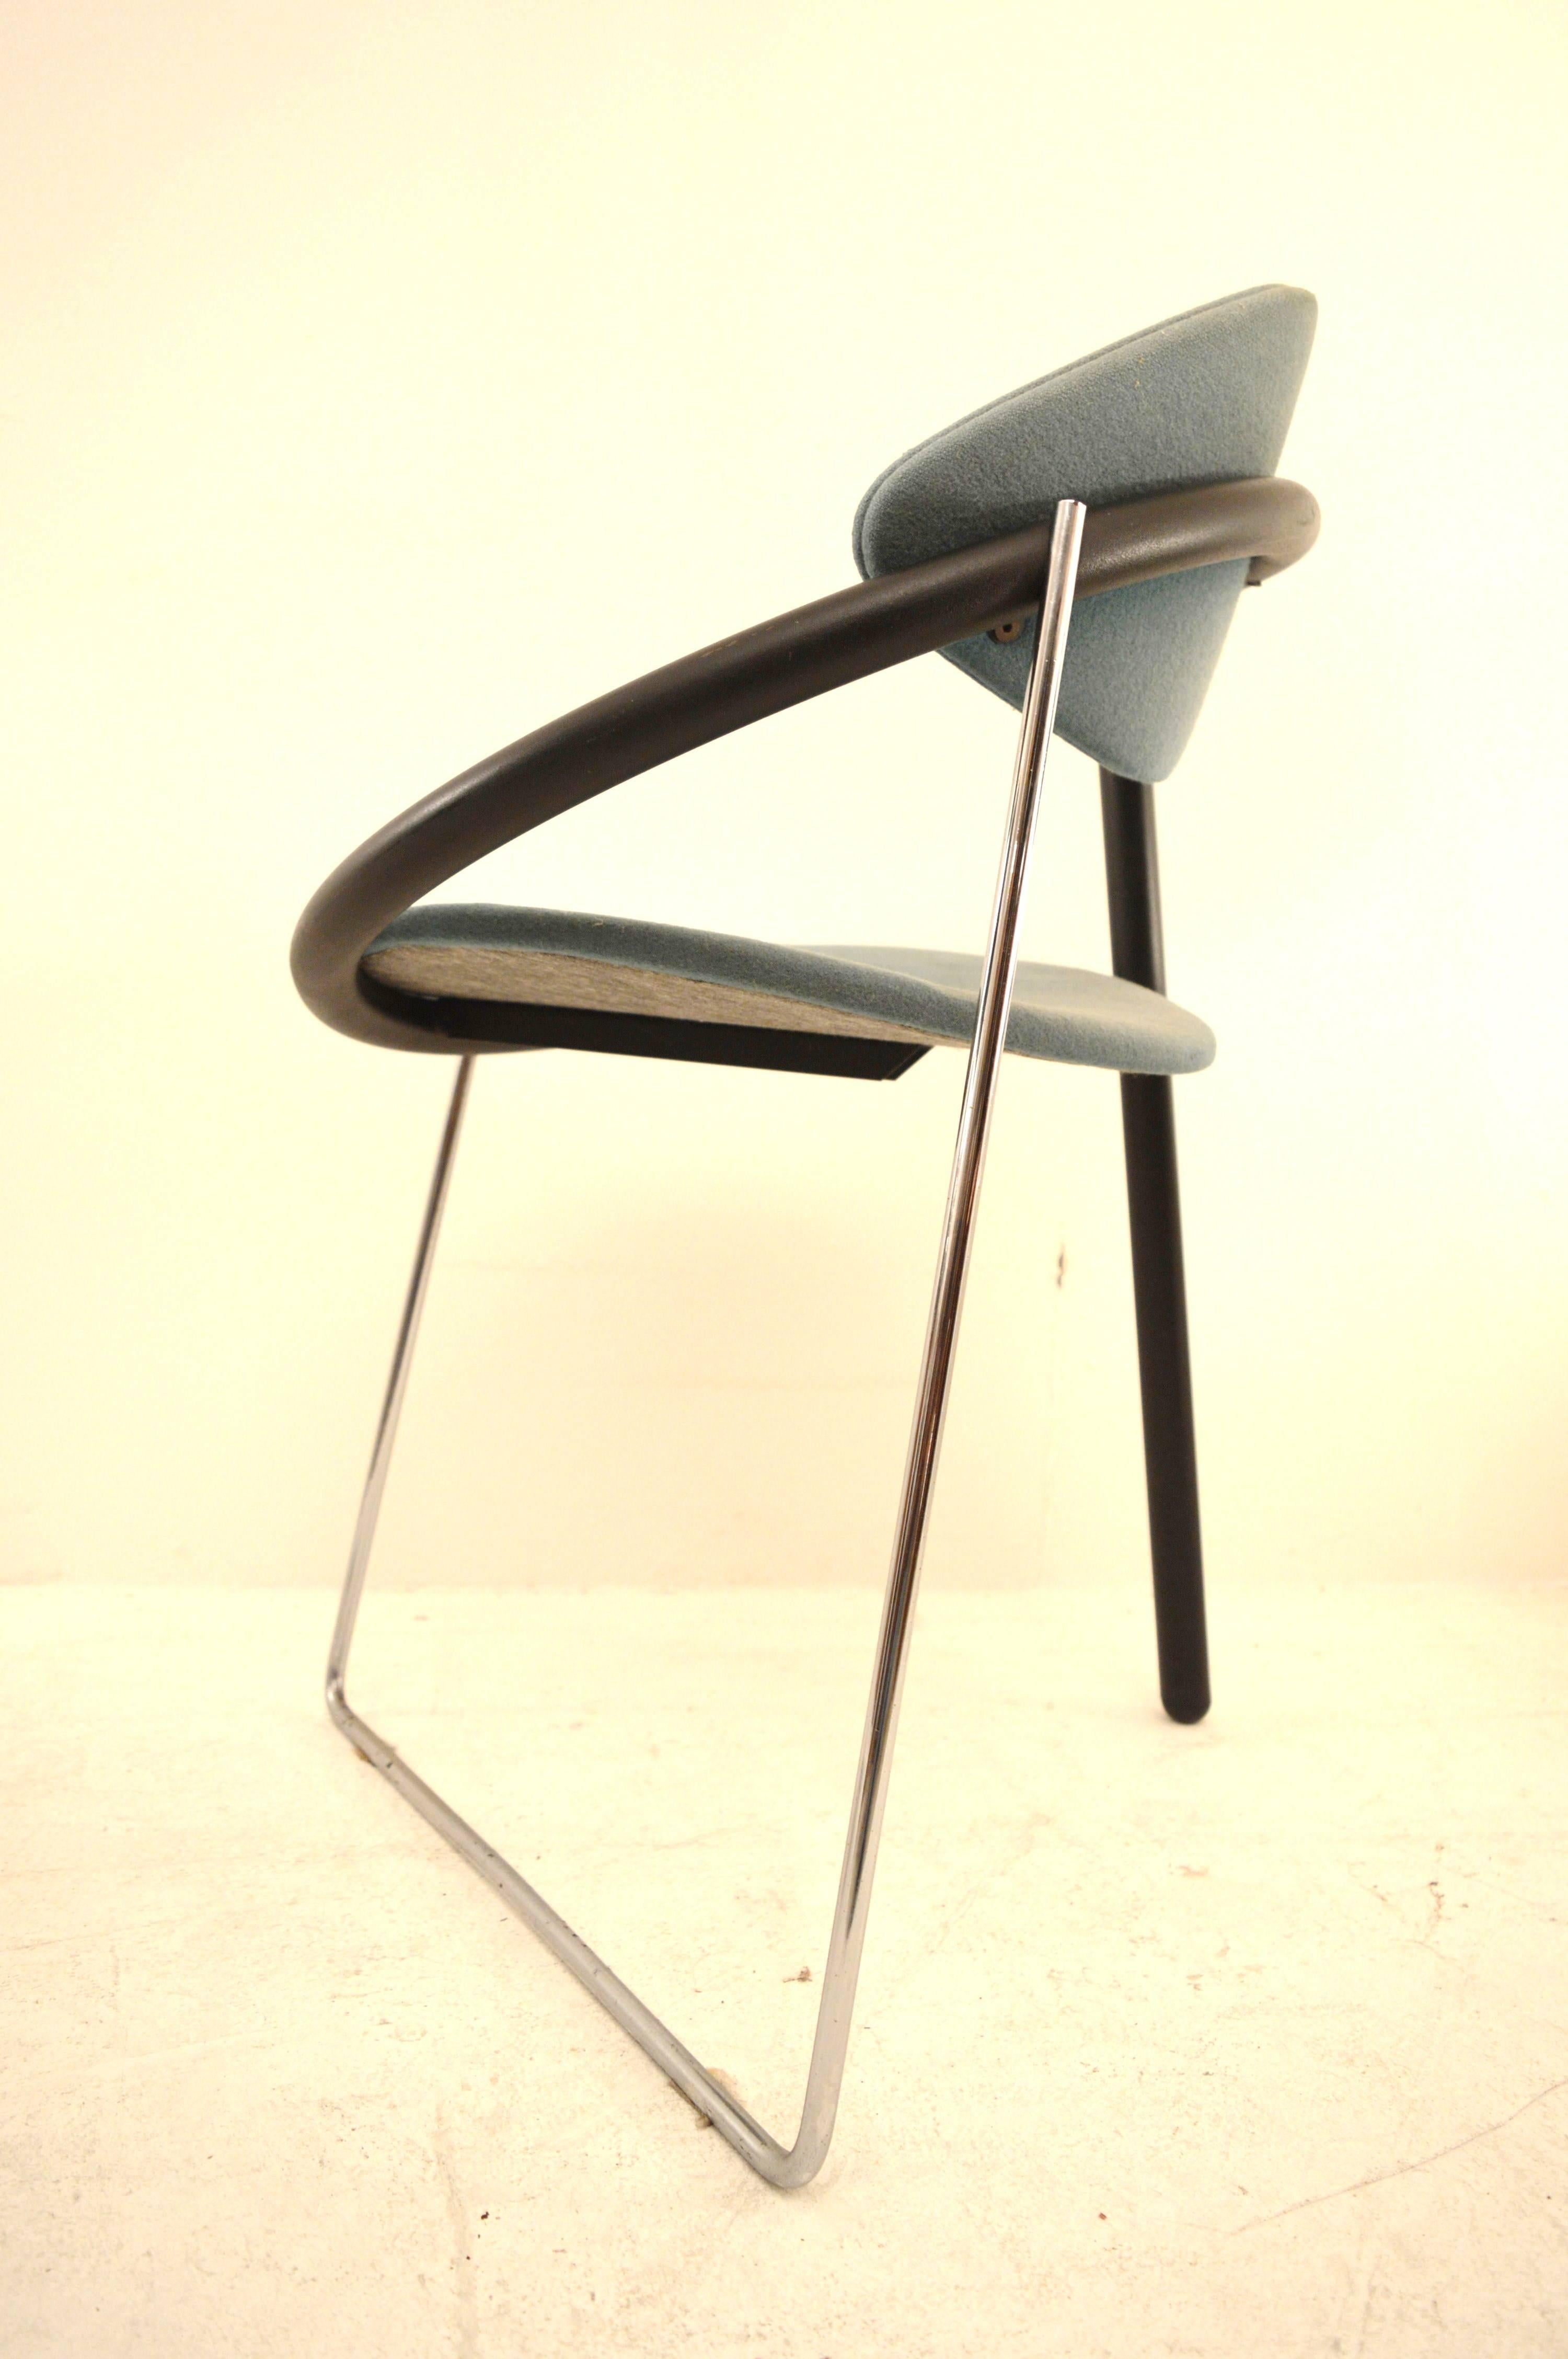 Dutch Memphis Style Chairs by Boonzaaijer Mazairac, 1986